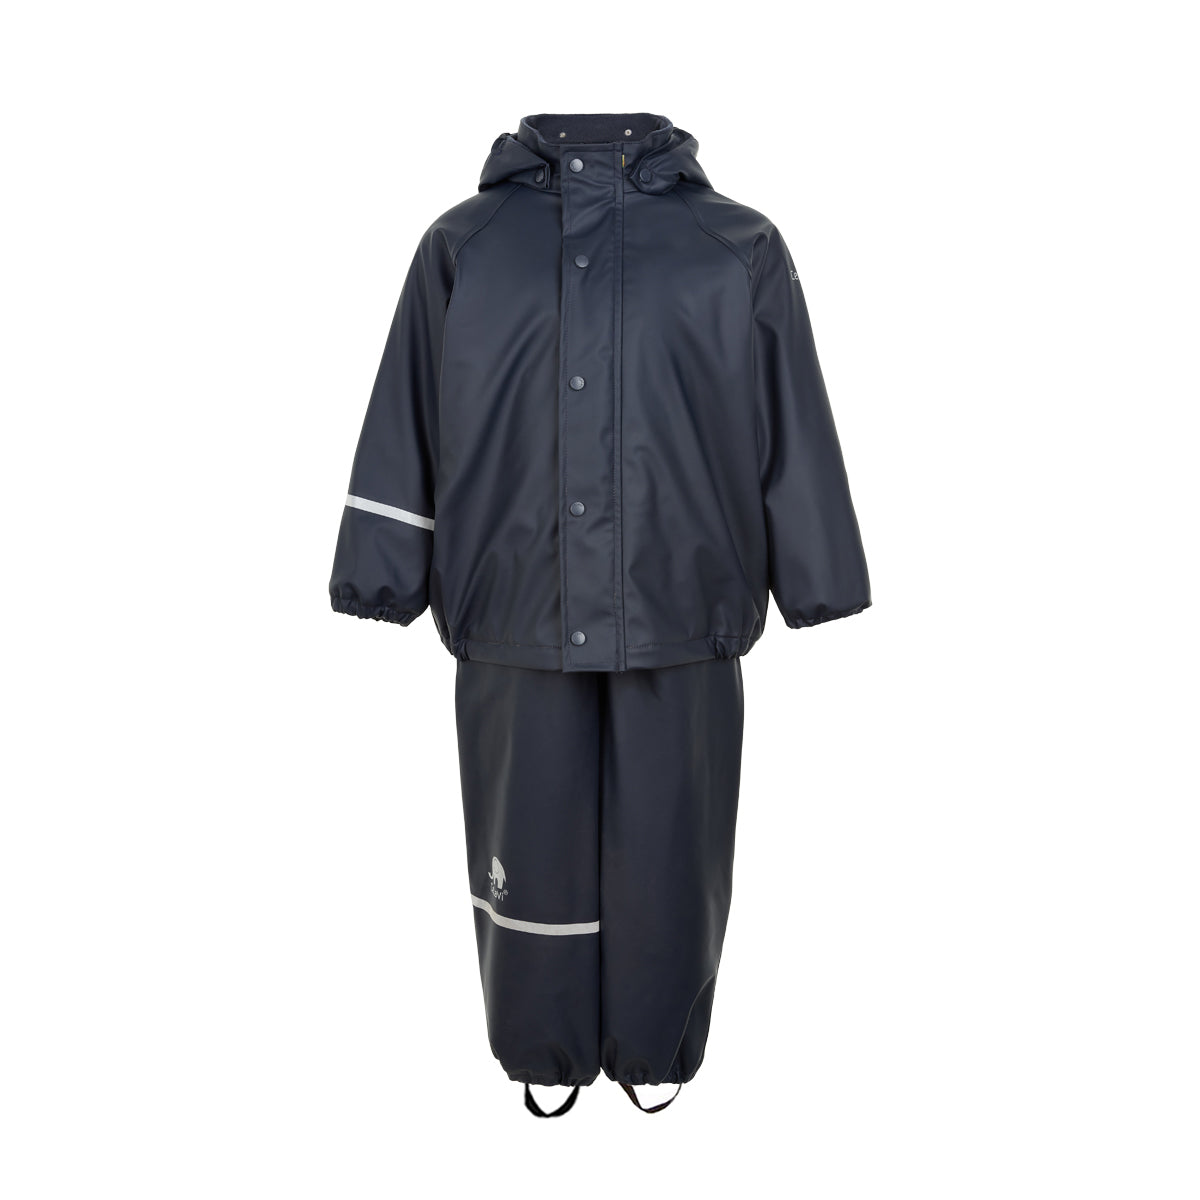 Rainwear suitable for 5-9 ages – PuddleDucks